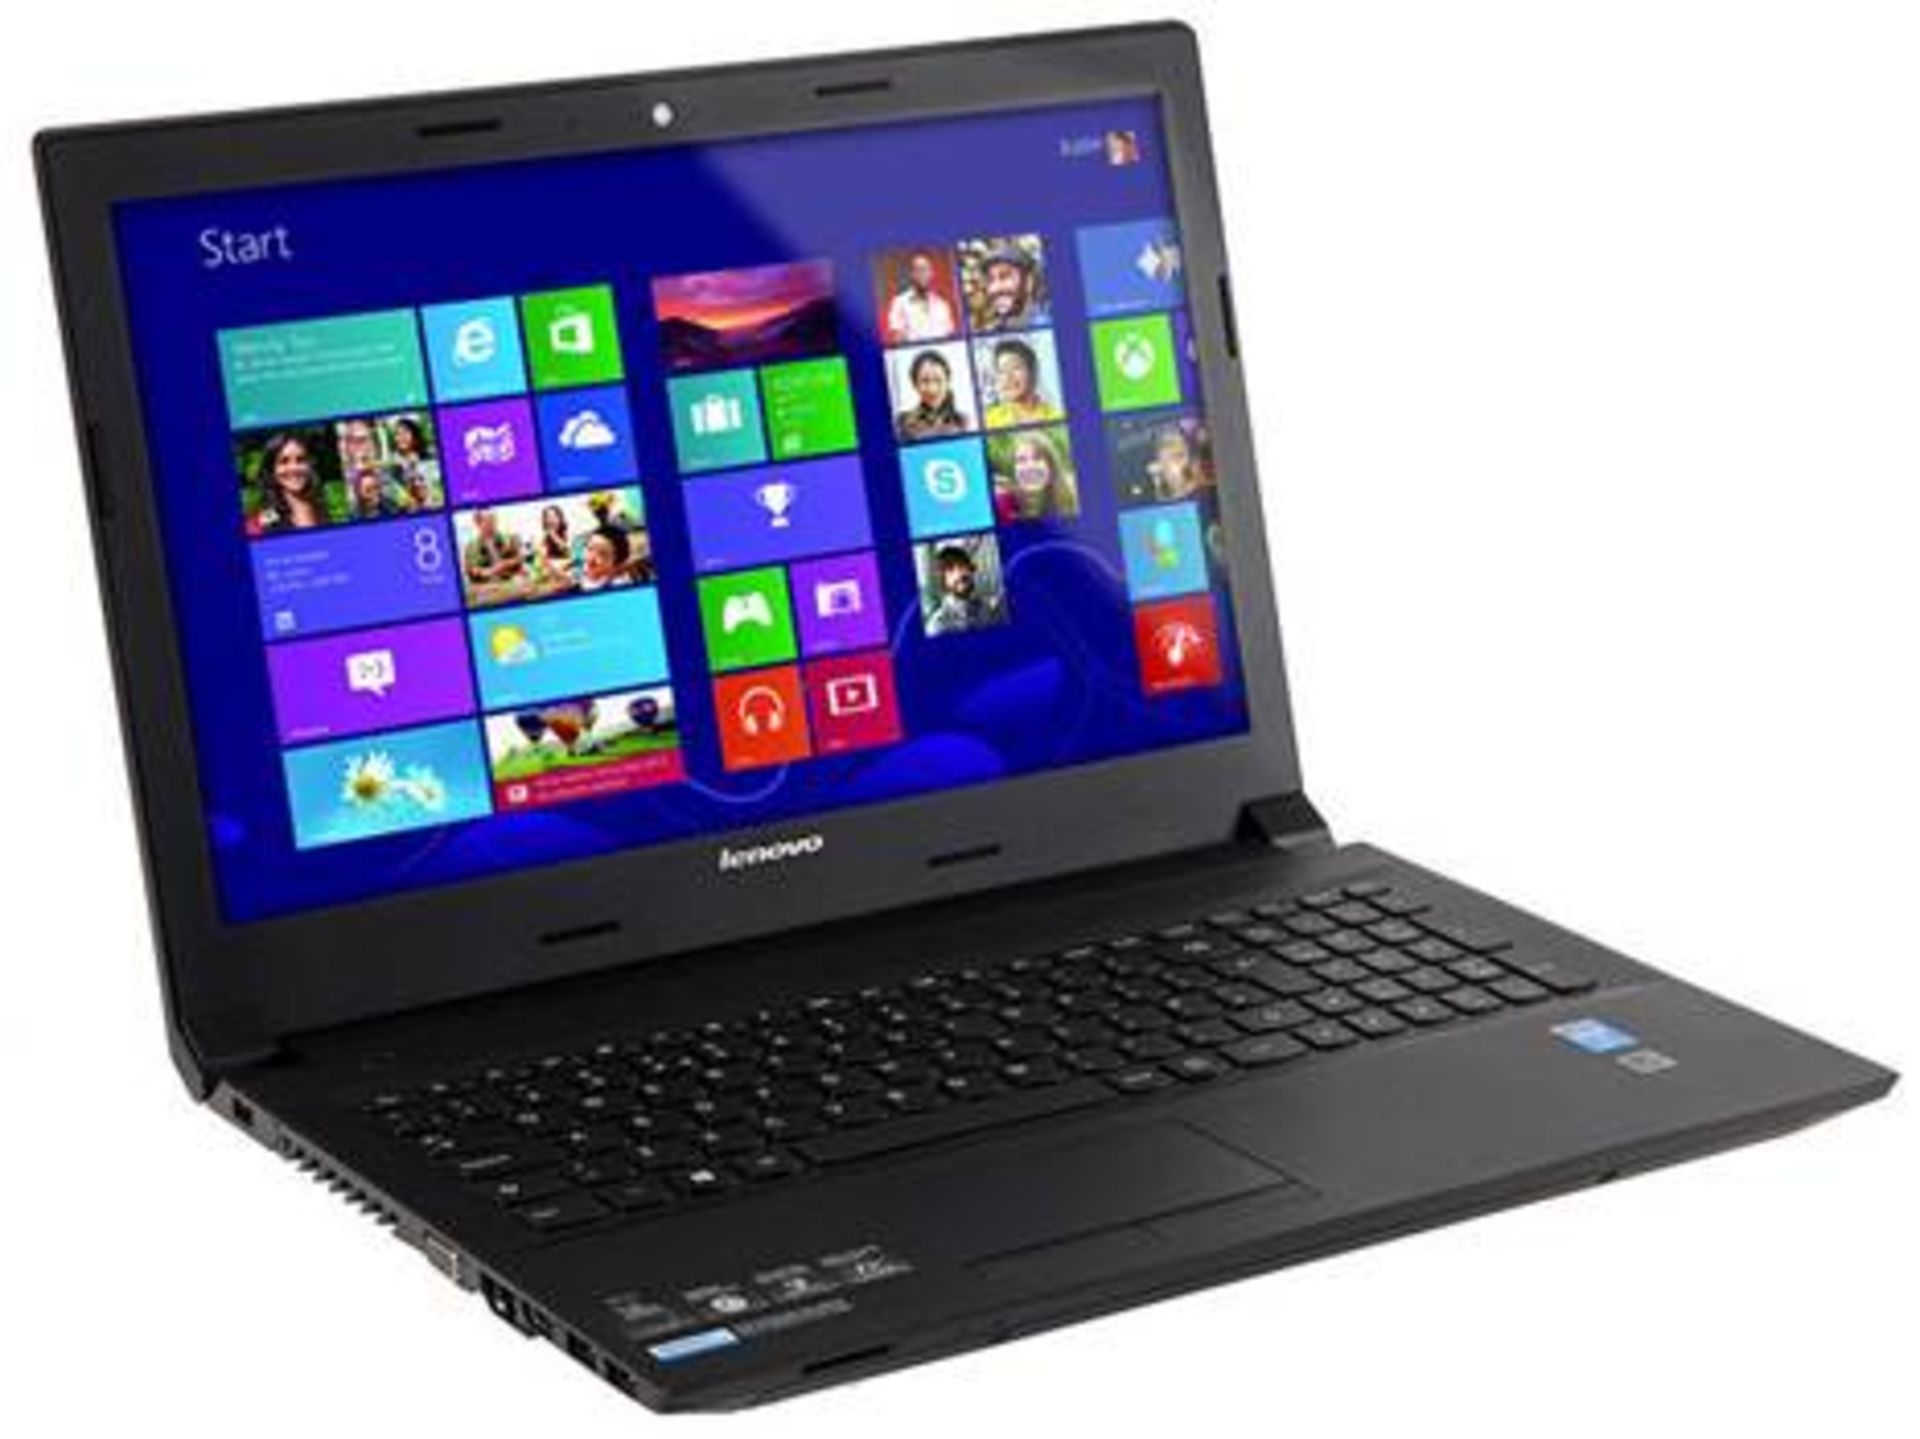 V Lenovo (IBM) G50-30 15.6" Laptop Intel Celeron N2840 2.16ghz 4GB RAM 500GB HDD Windows 8.1 Brand